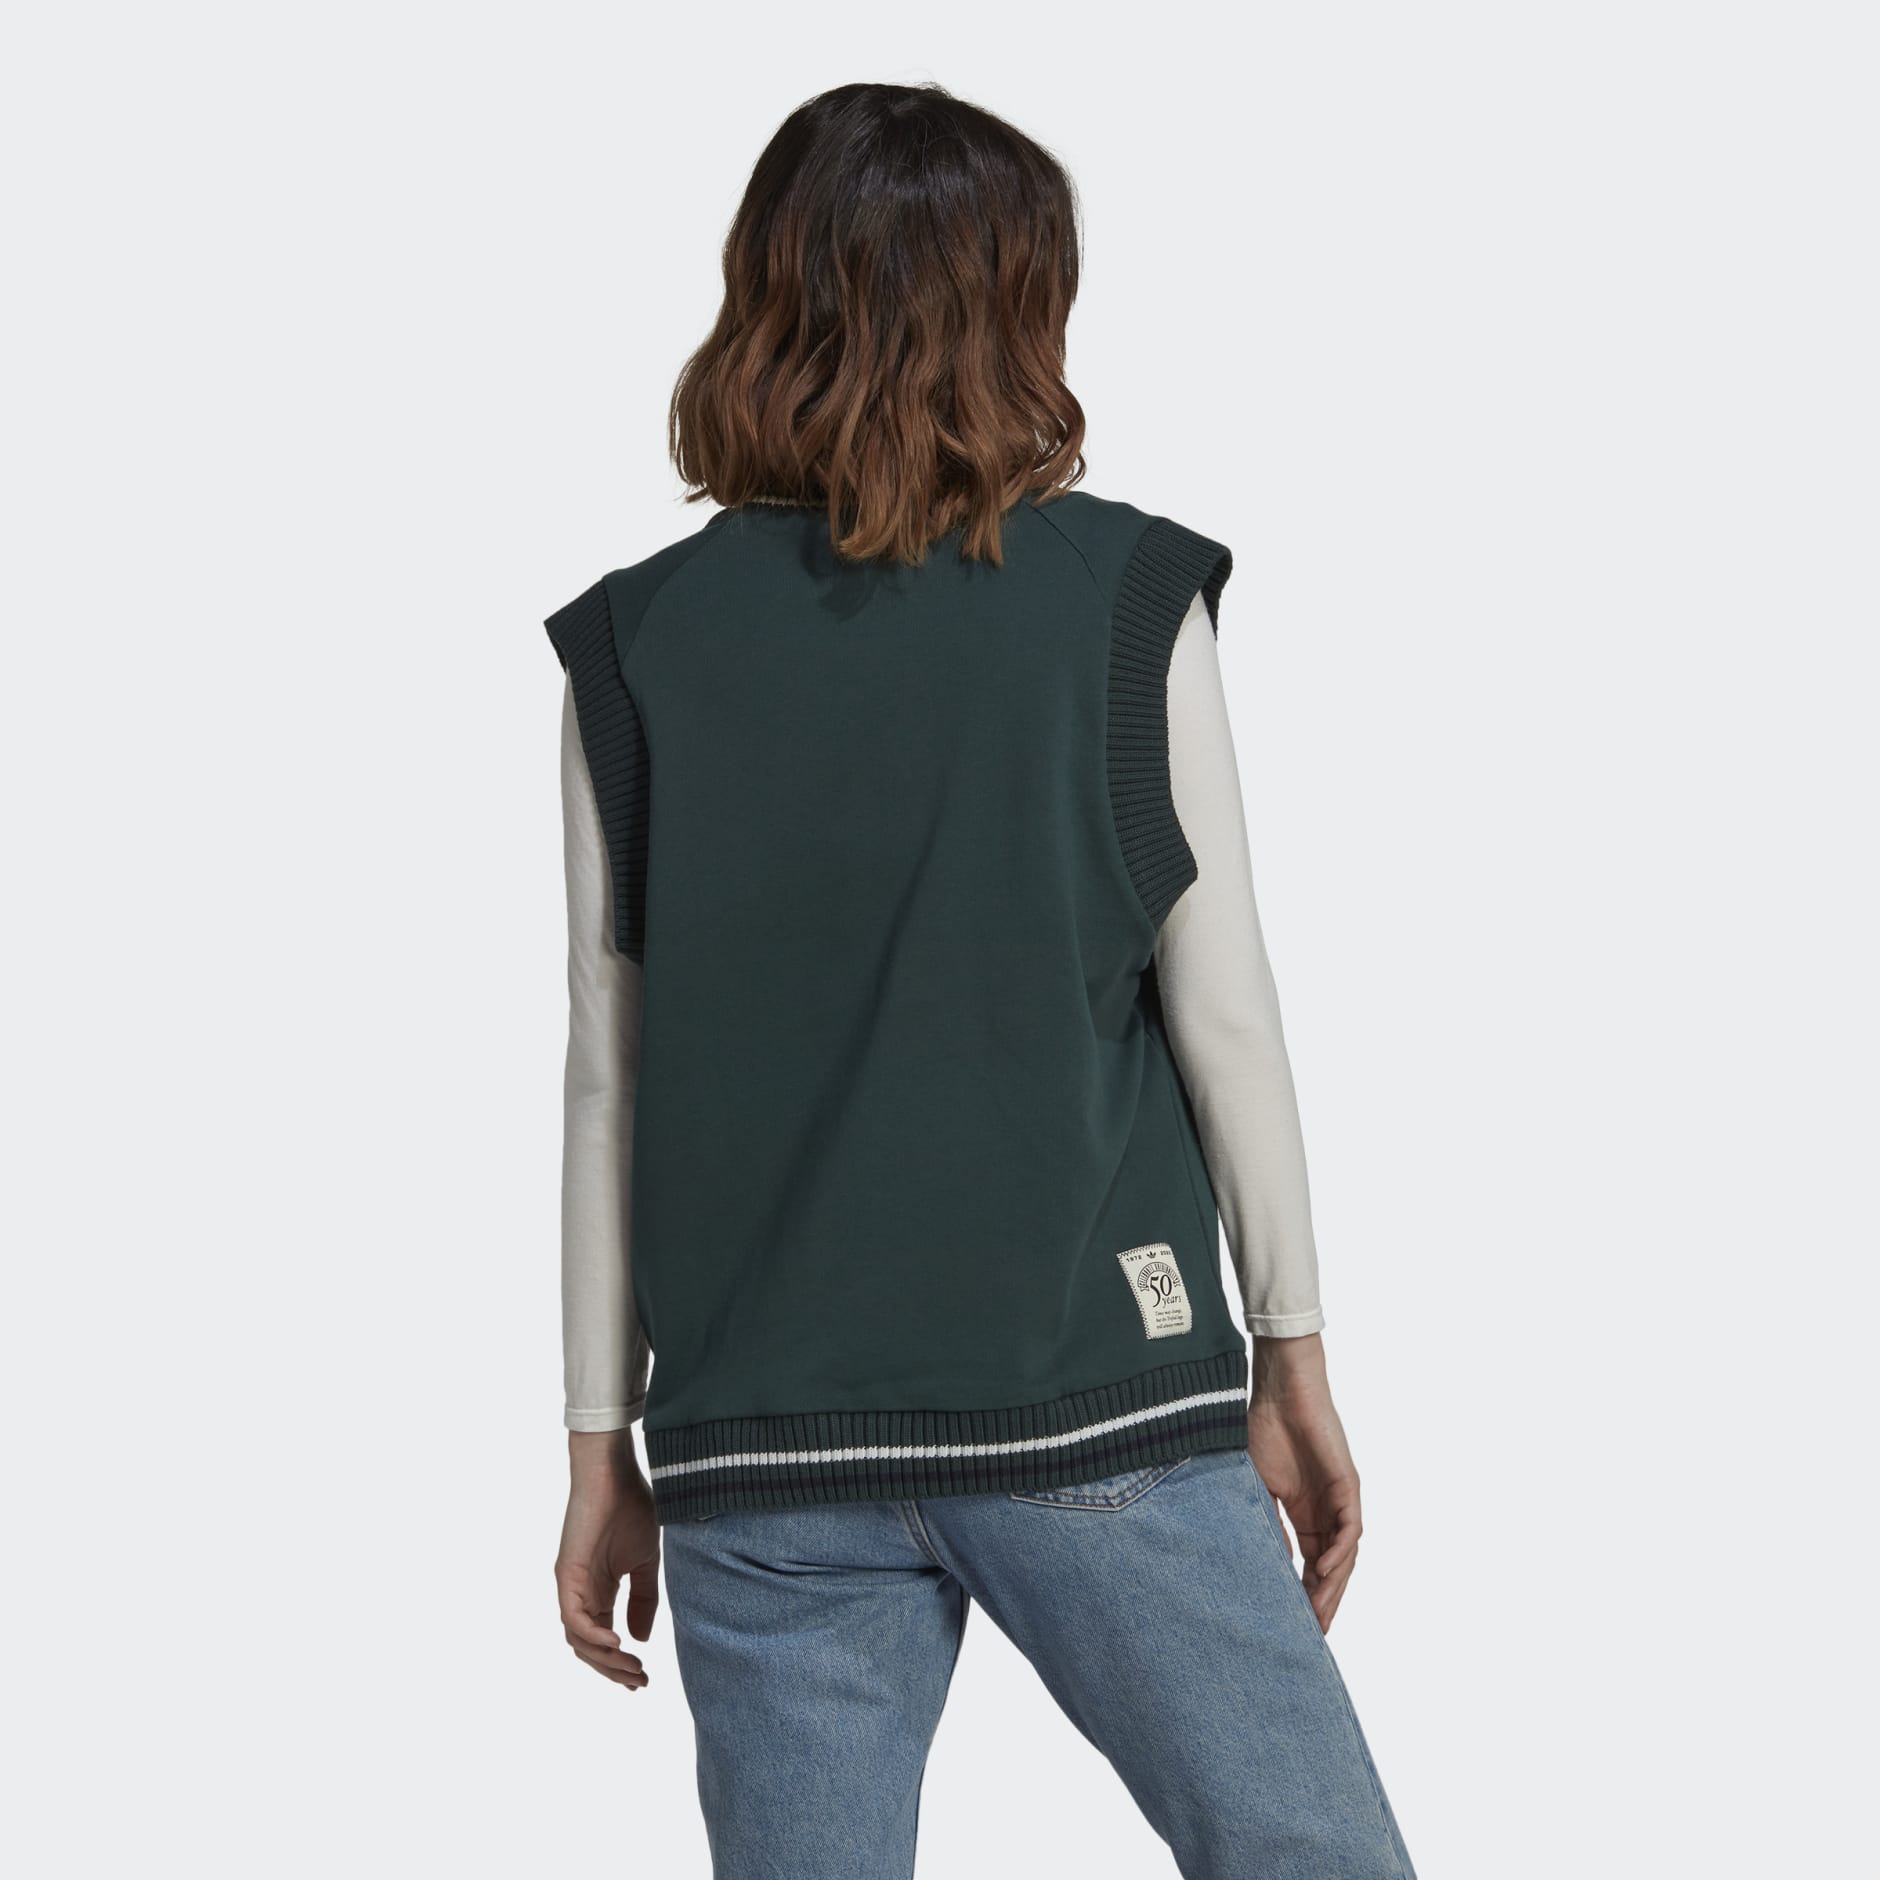 Women's Clothing - adidas Originals Class of 72 Vest - Green | adidas ...